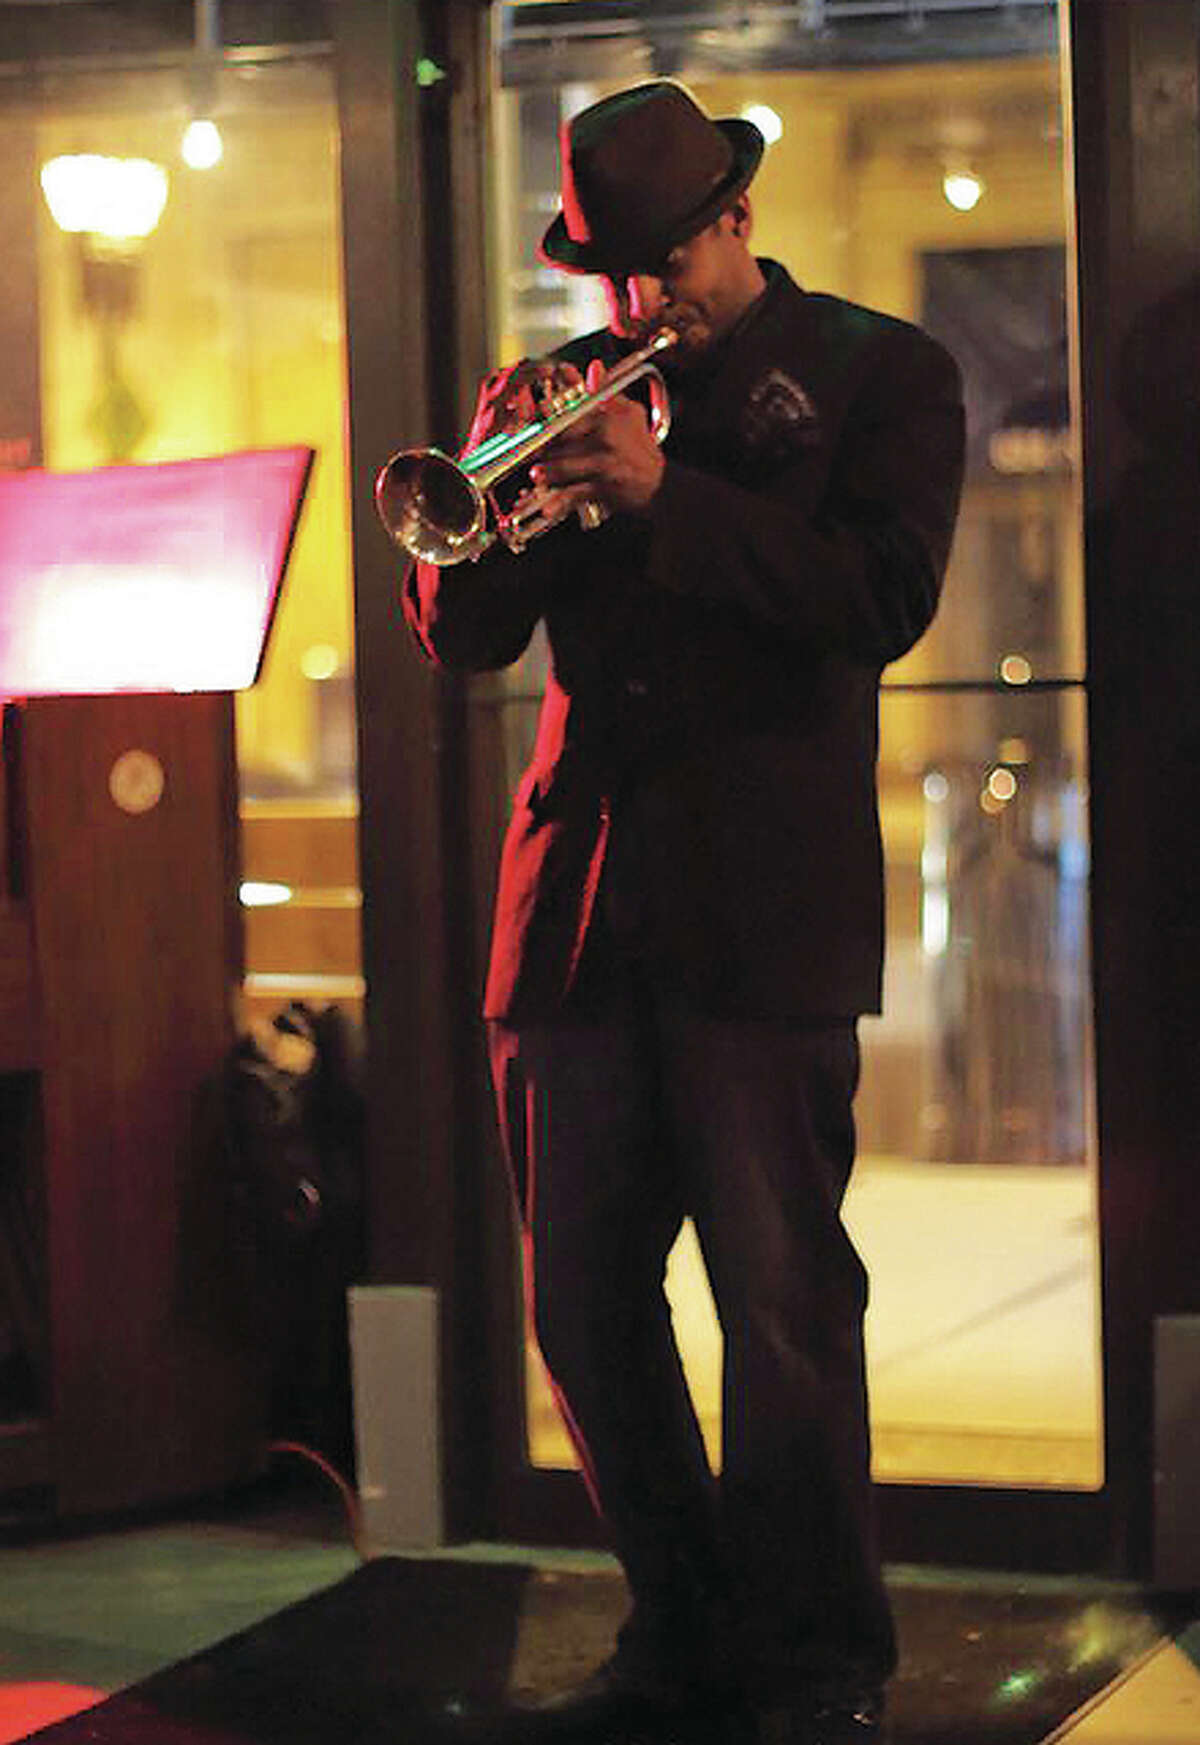 St. Louis-born jazz trumpet player Kasimu Taylor